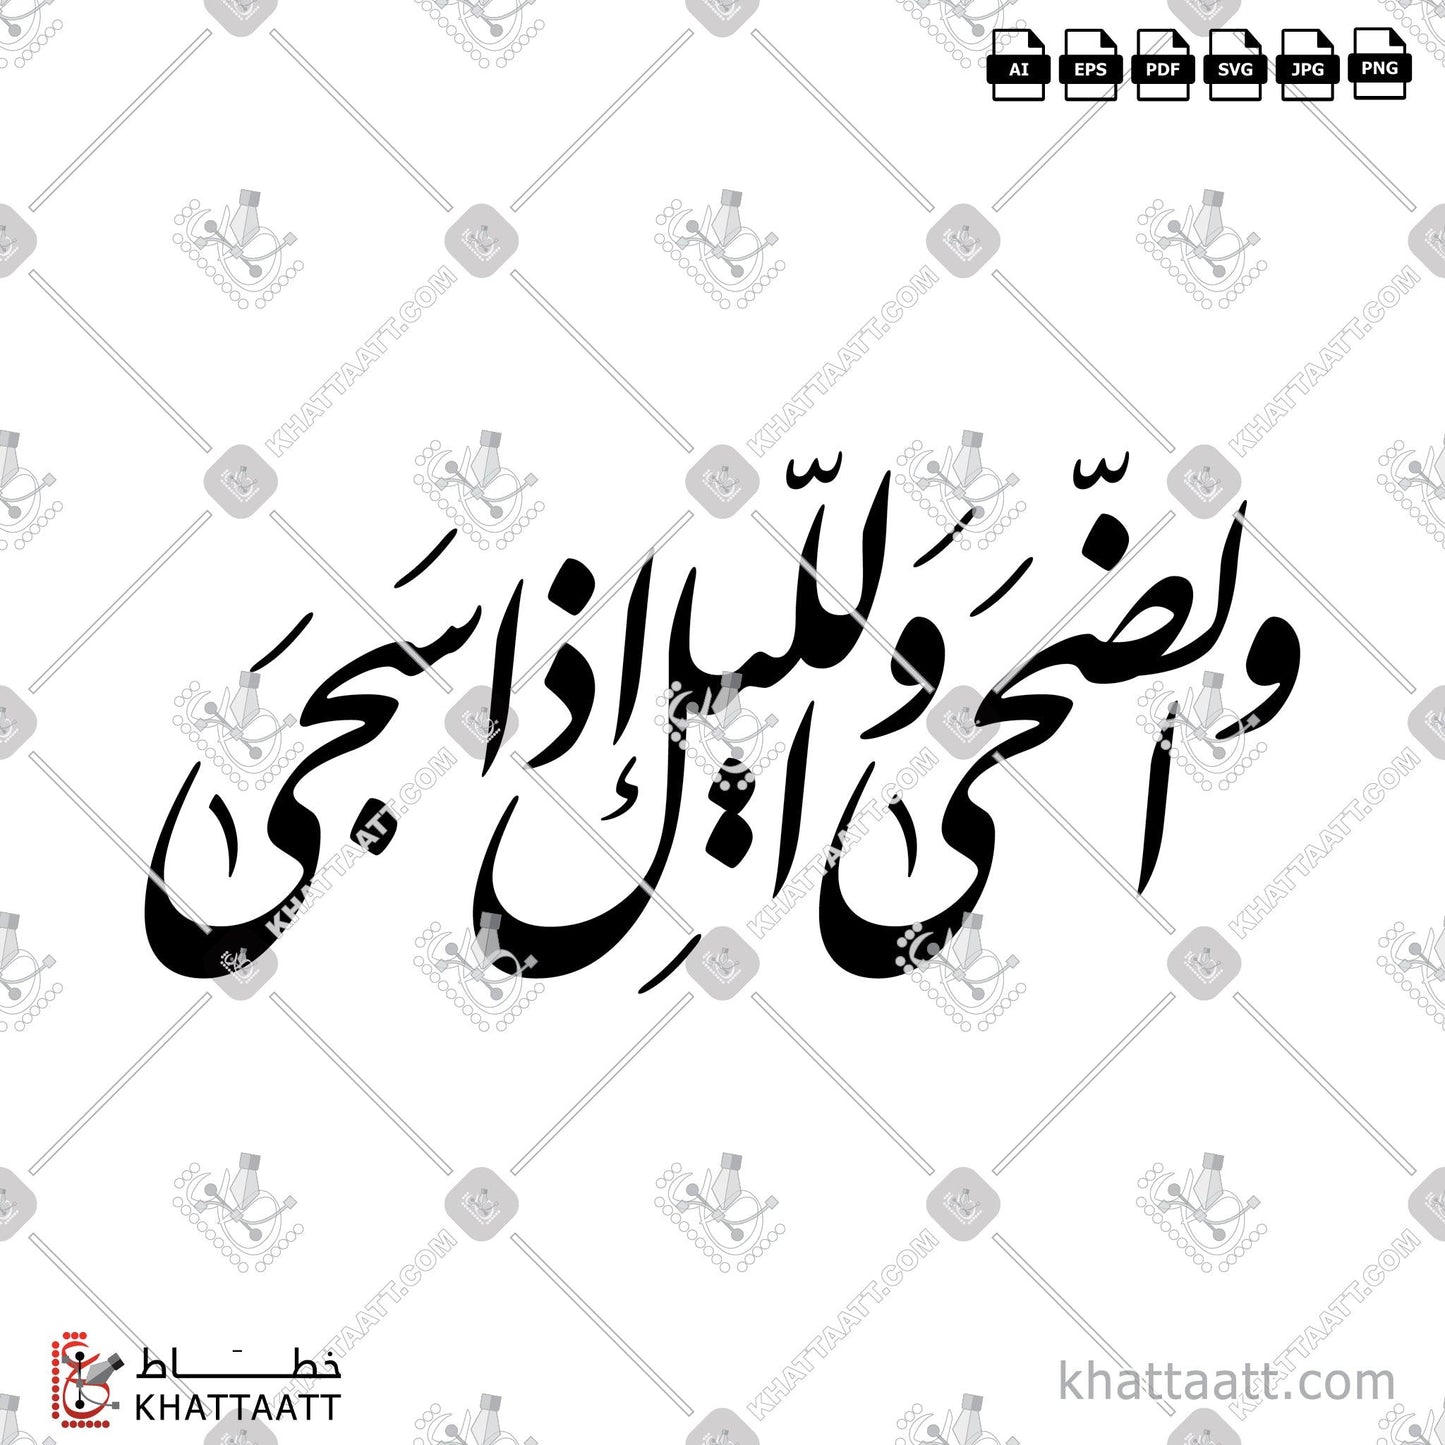 Download Arabic Calligraphy of والضحى والليل إذا سجى in Farsi - الخط الفارسي in vector and .png